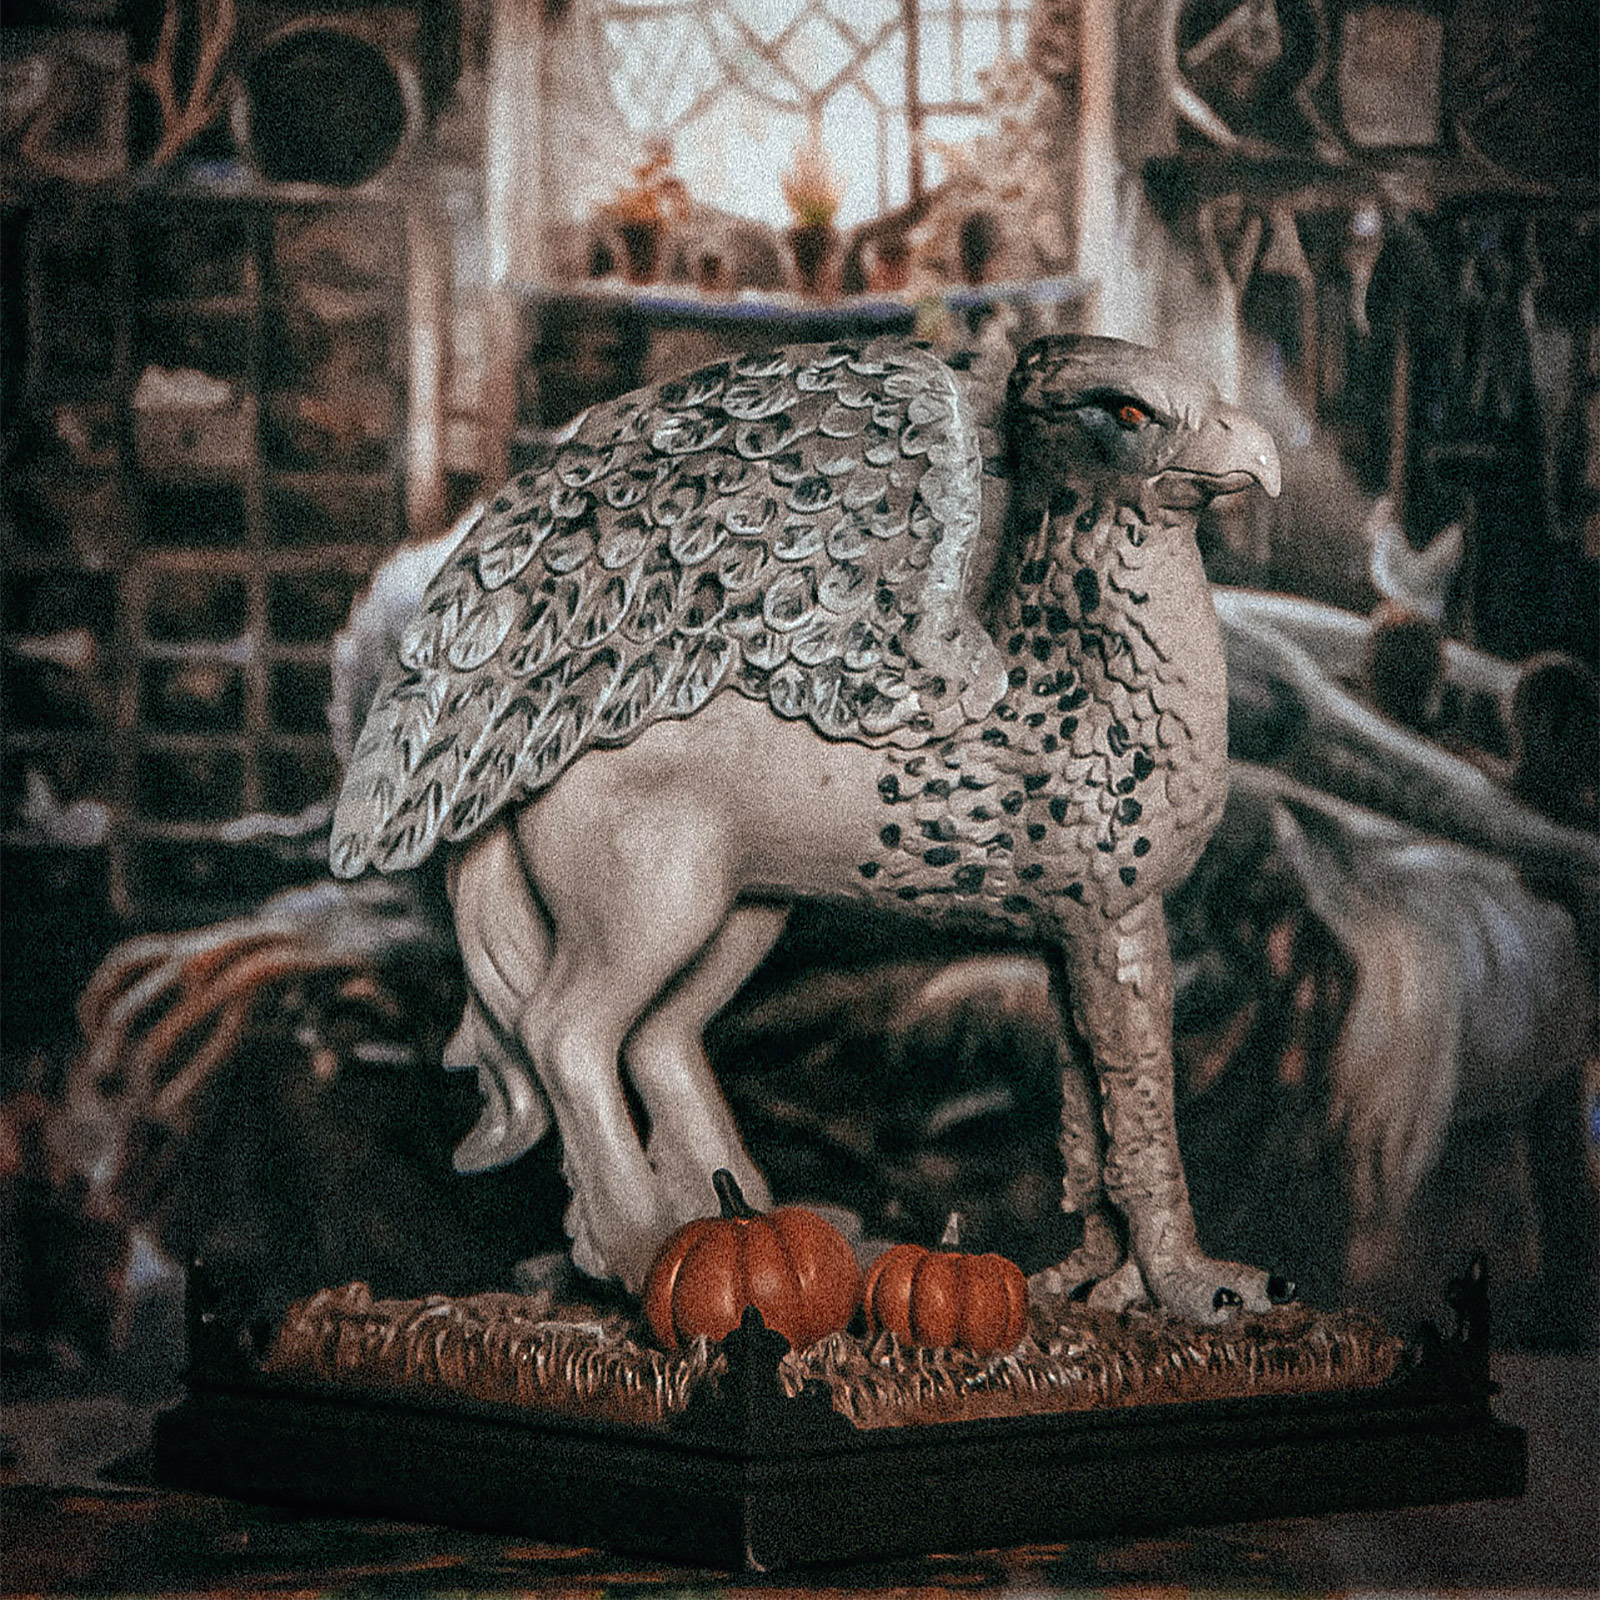 Seidenschnabel - Harry Potter Magische Tierwesen Figur